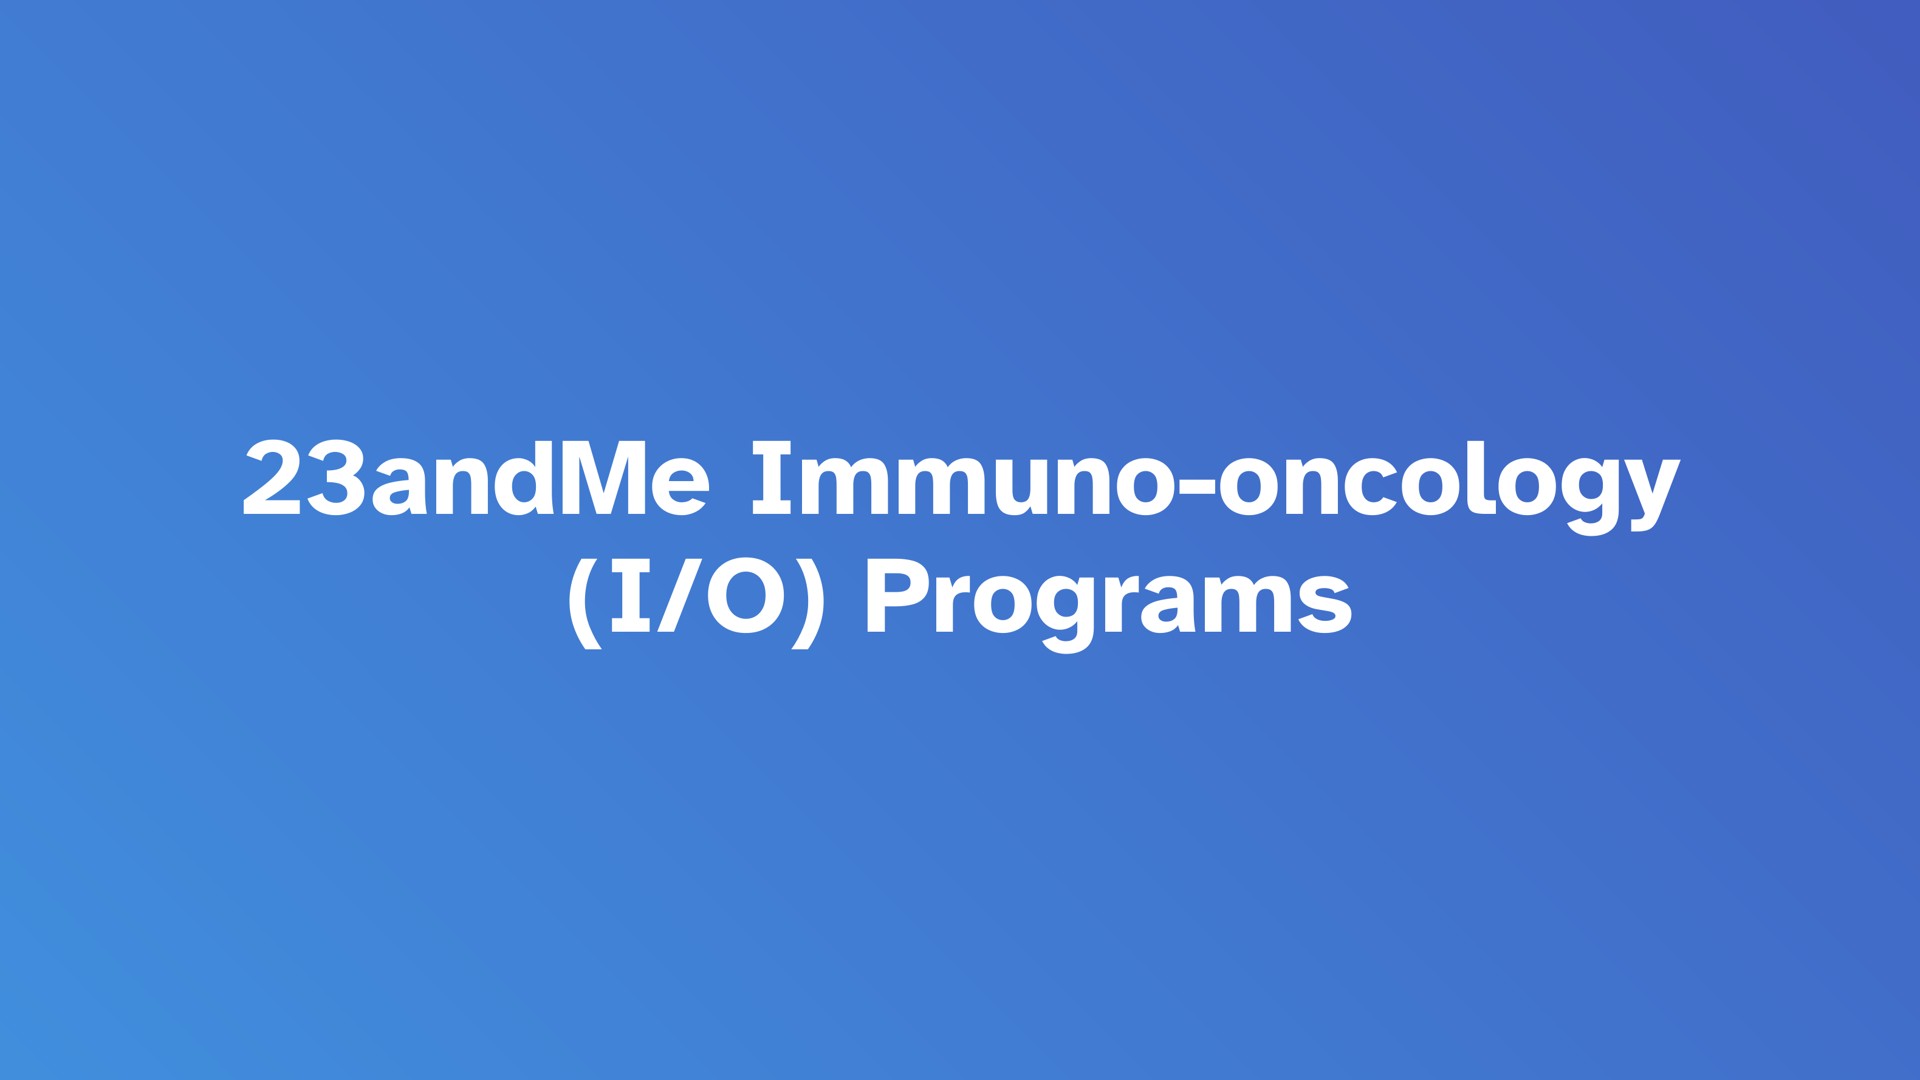 oncology i programs | 23andMe